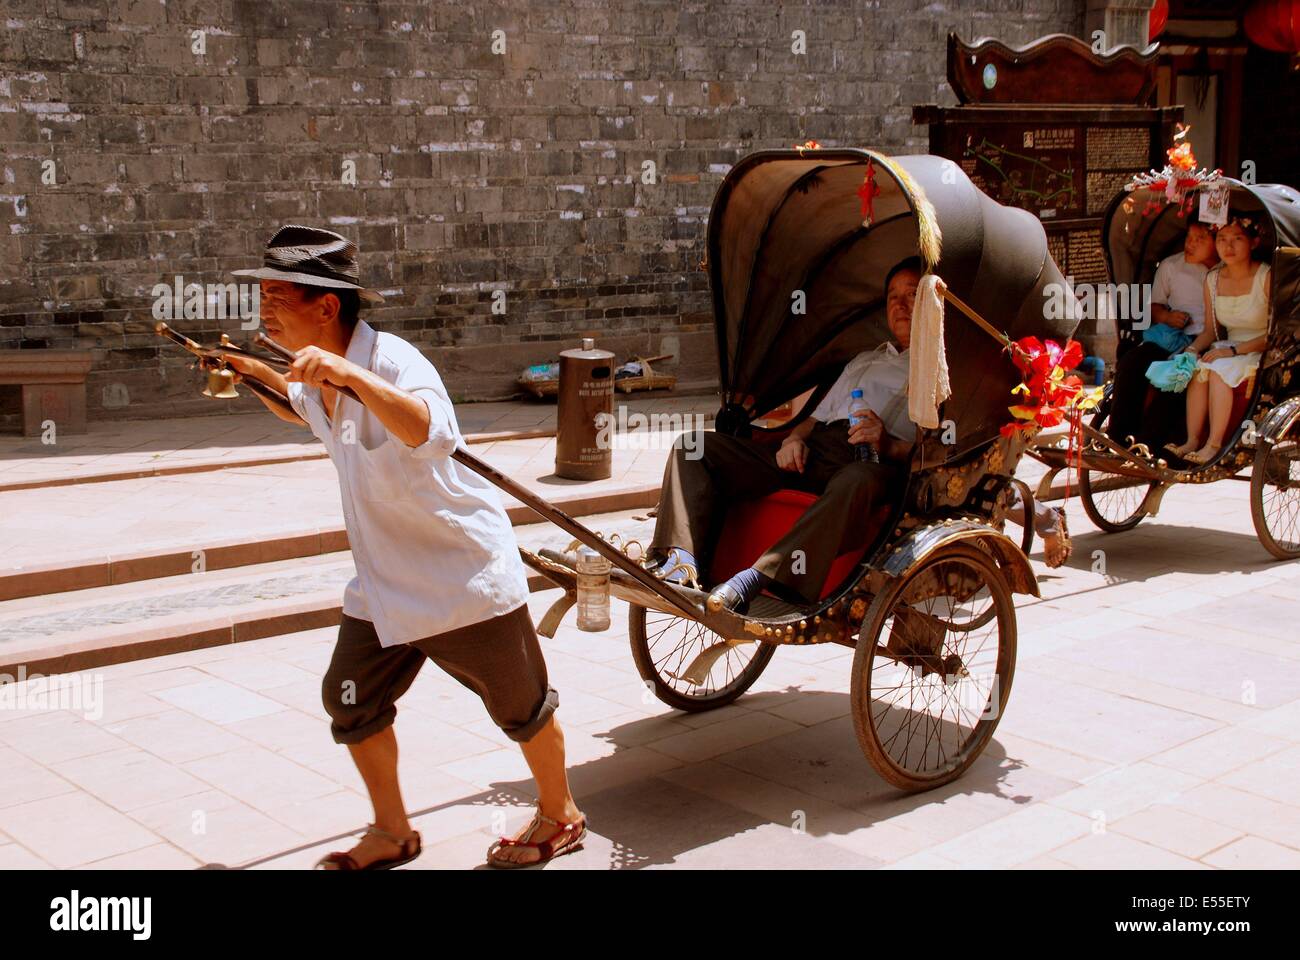 luo-dai-china-man-pulling-his-rickshaw-takes-visitors-for-a-ride-through-E55ETY.jpg